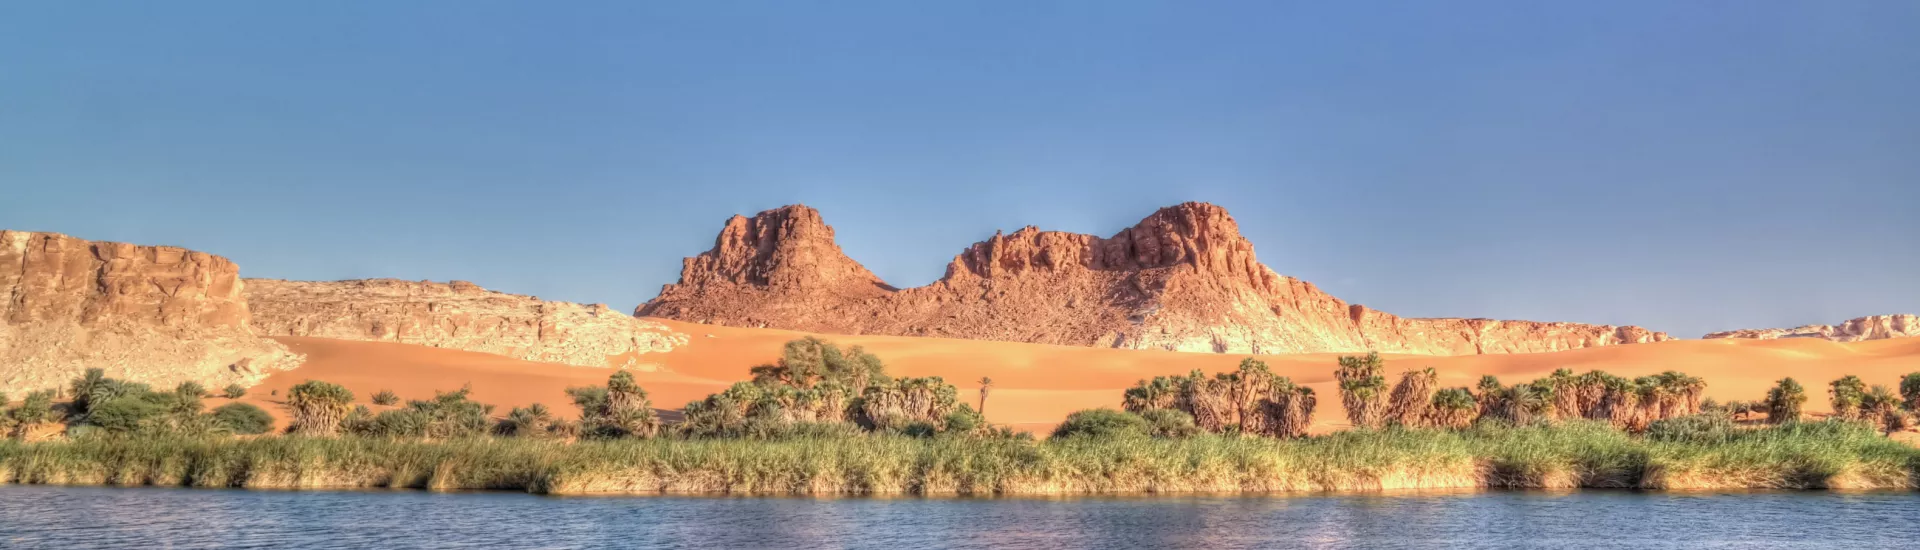 Unianga Serir Lake Group in Ennedi, Chad